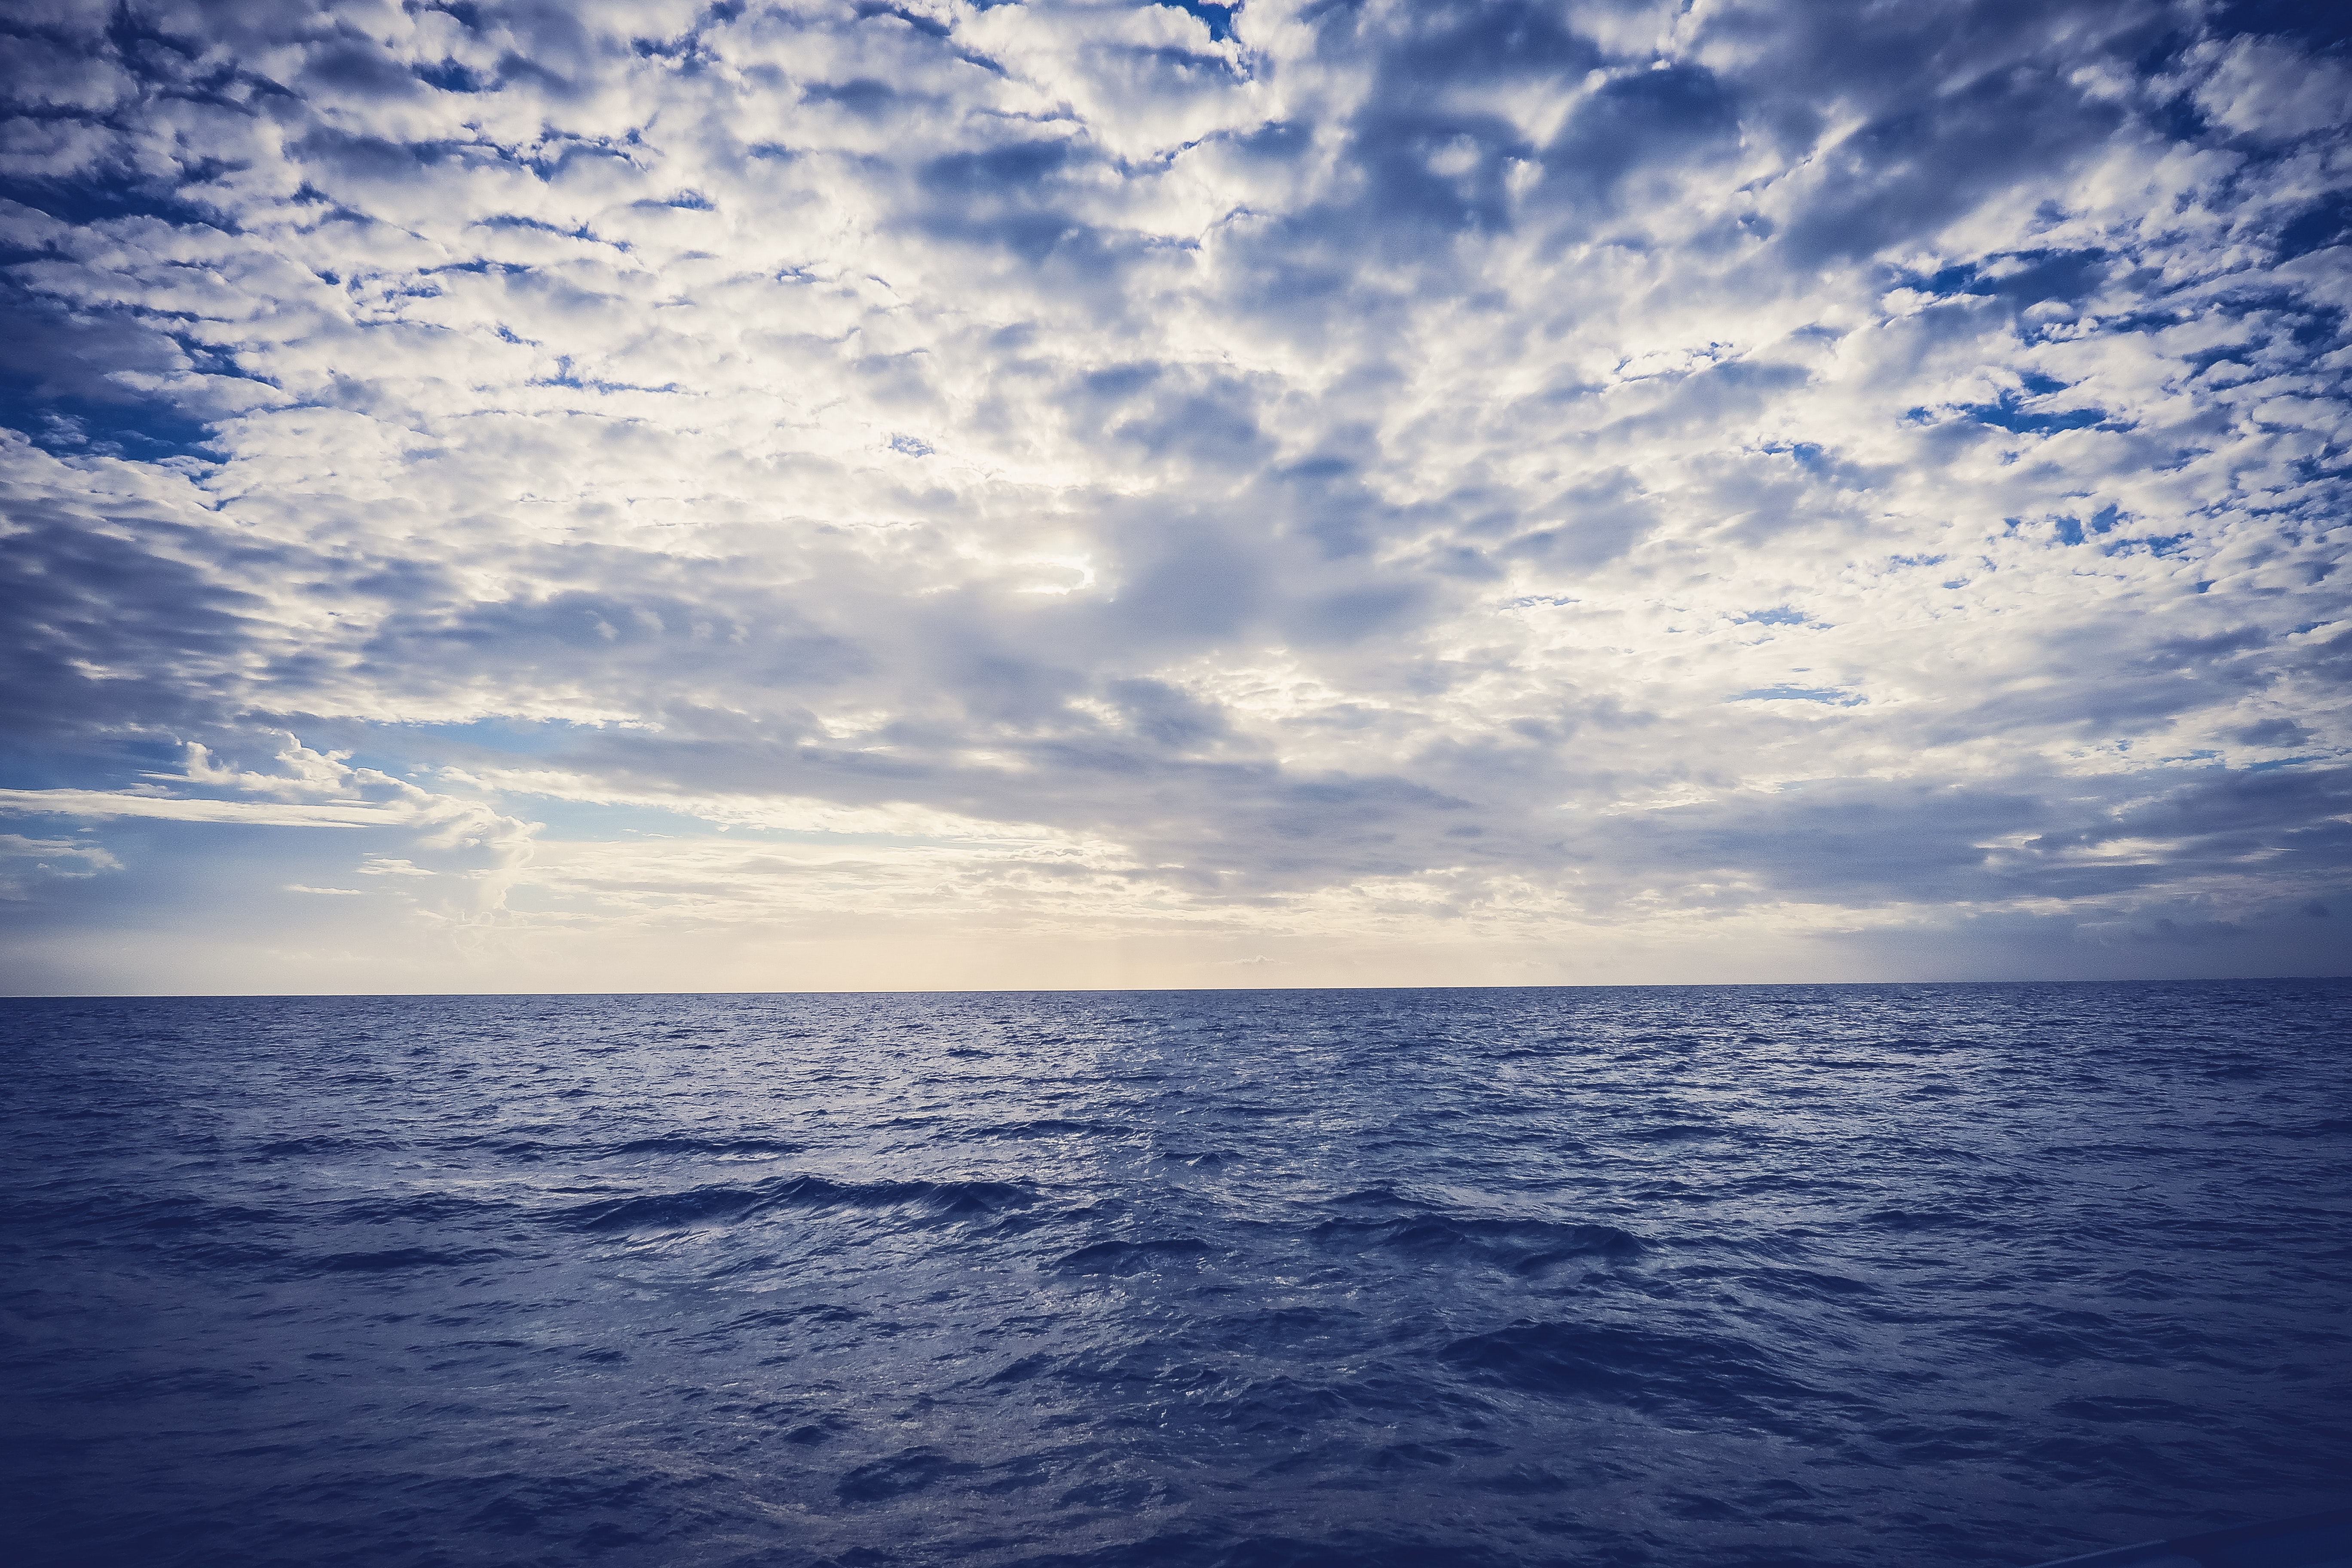 Безграничный океан. Море Горизонт. Облака над морем. Море и небо. Спокойное море.